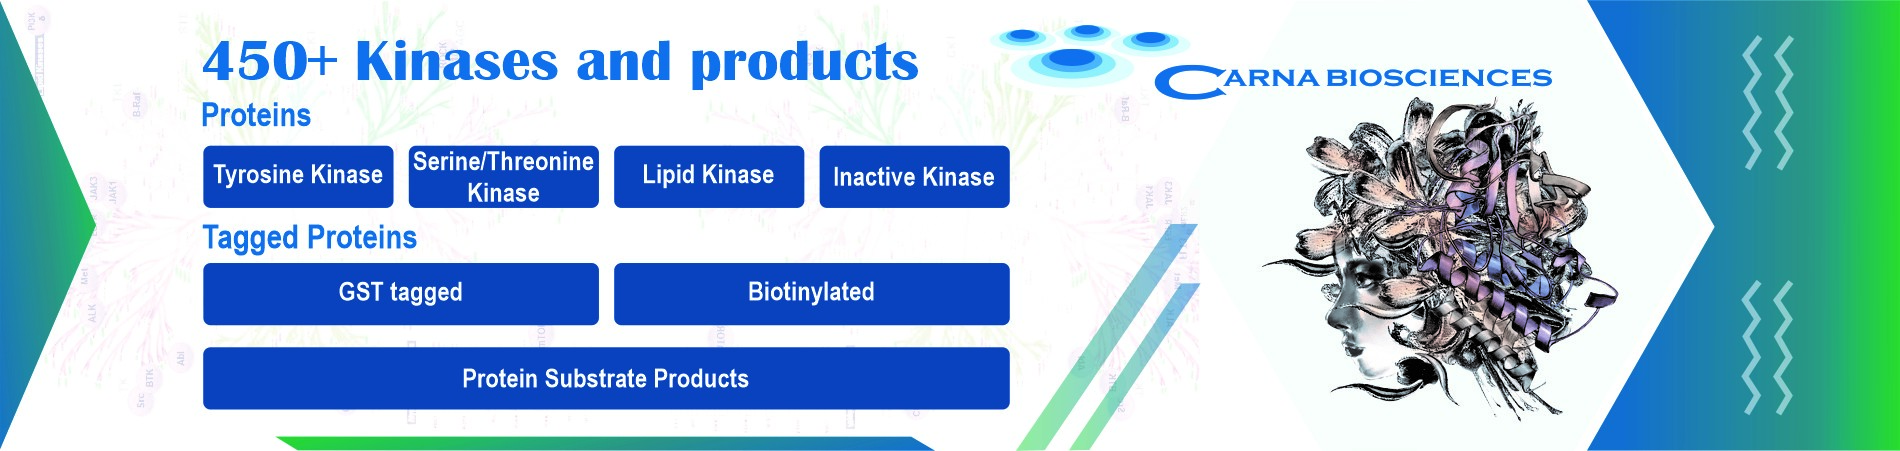 Carna Biosciences: A Leading Producer of Kinases